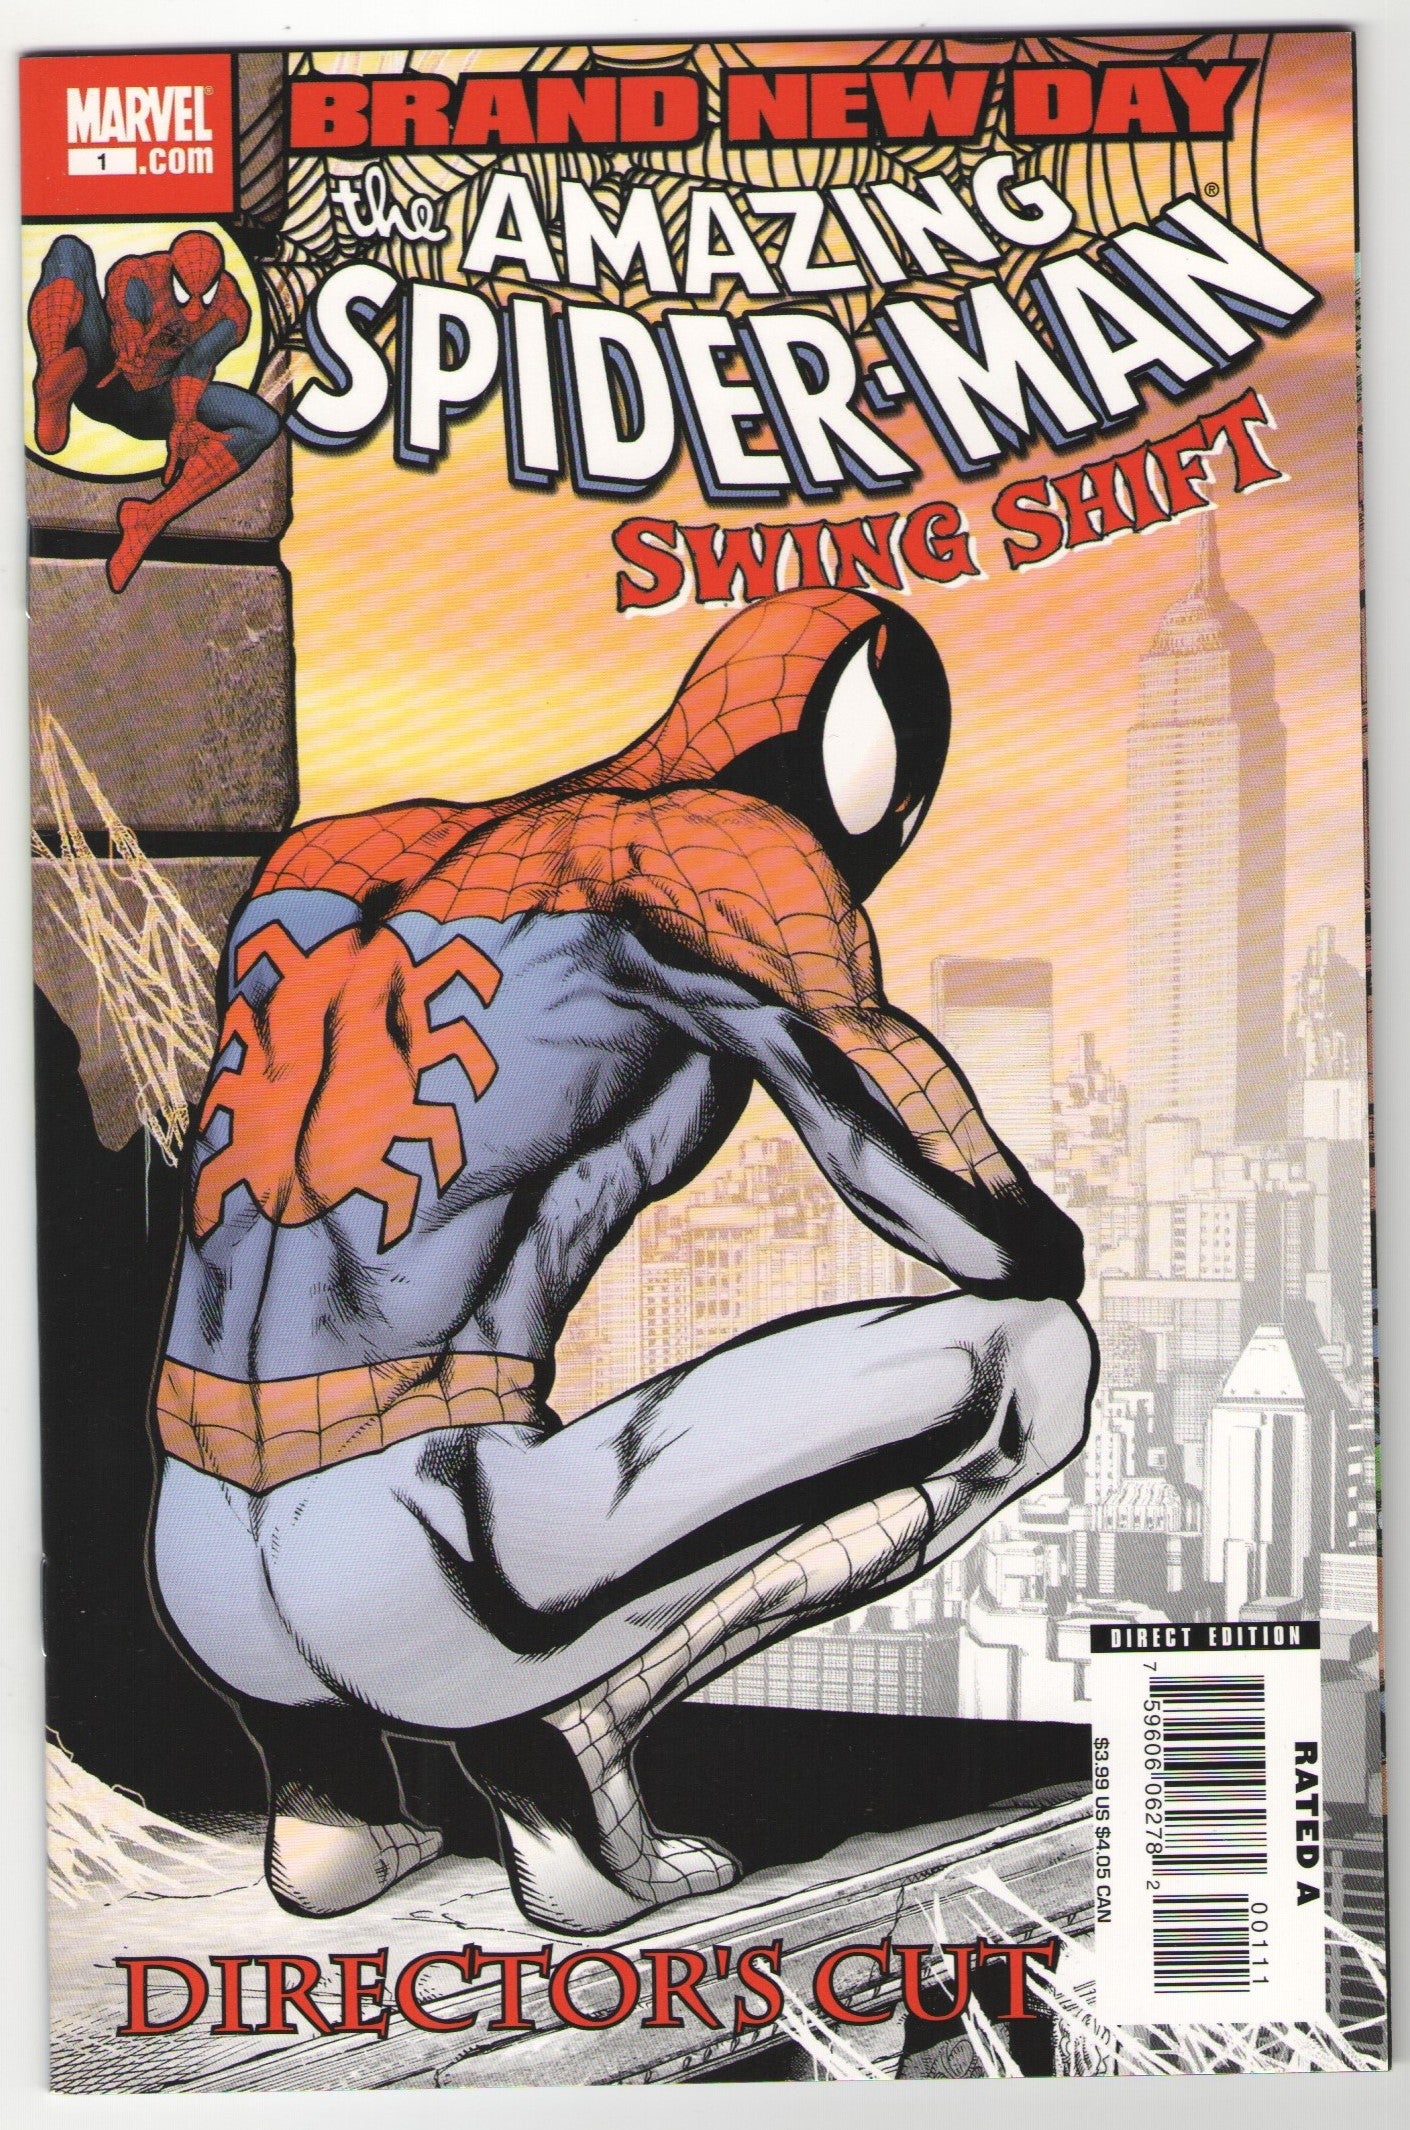 Spider-Man: Swing Shift (2008) Director’s Cut One-Shot